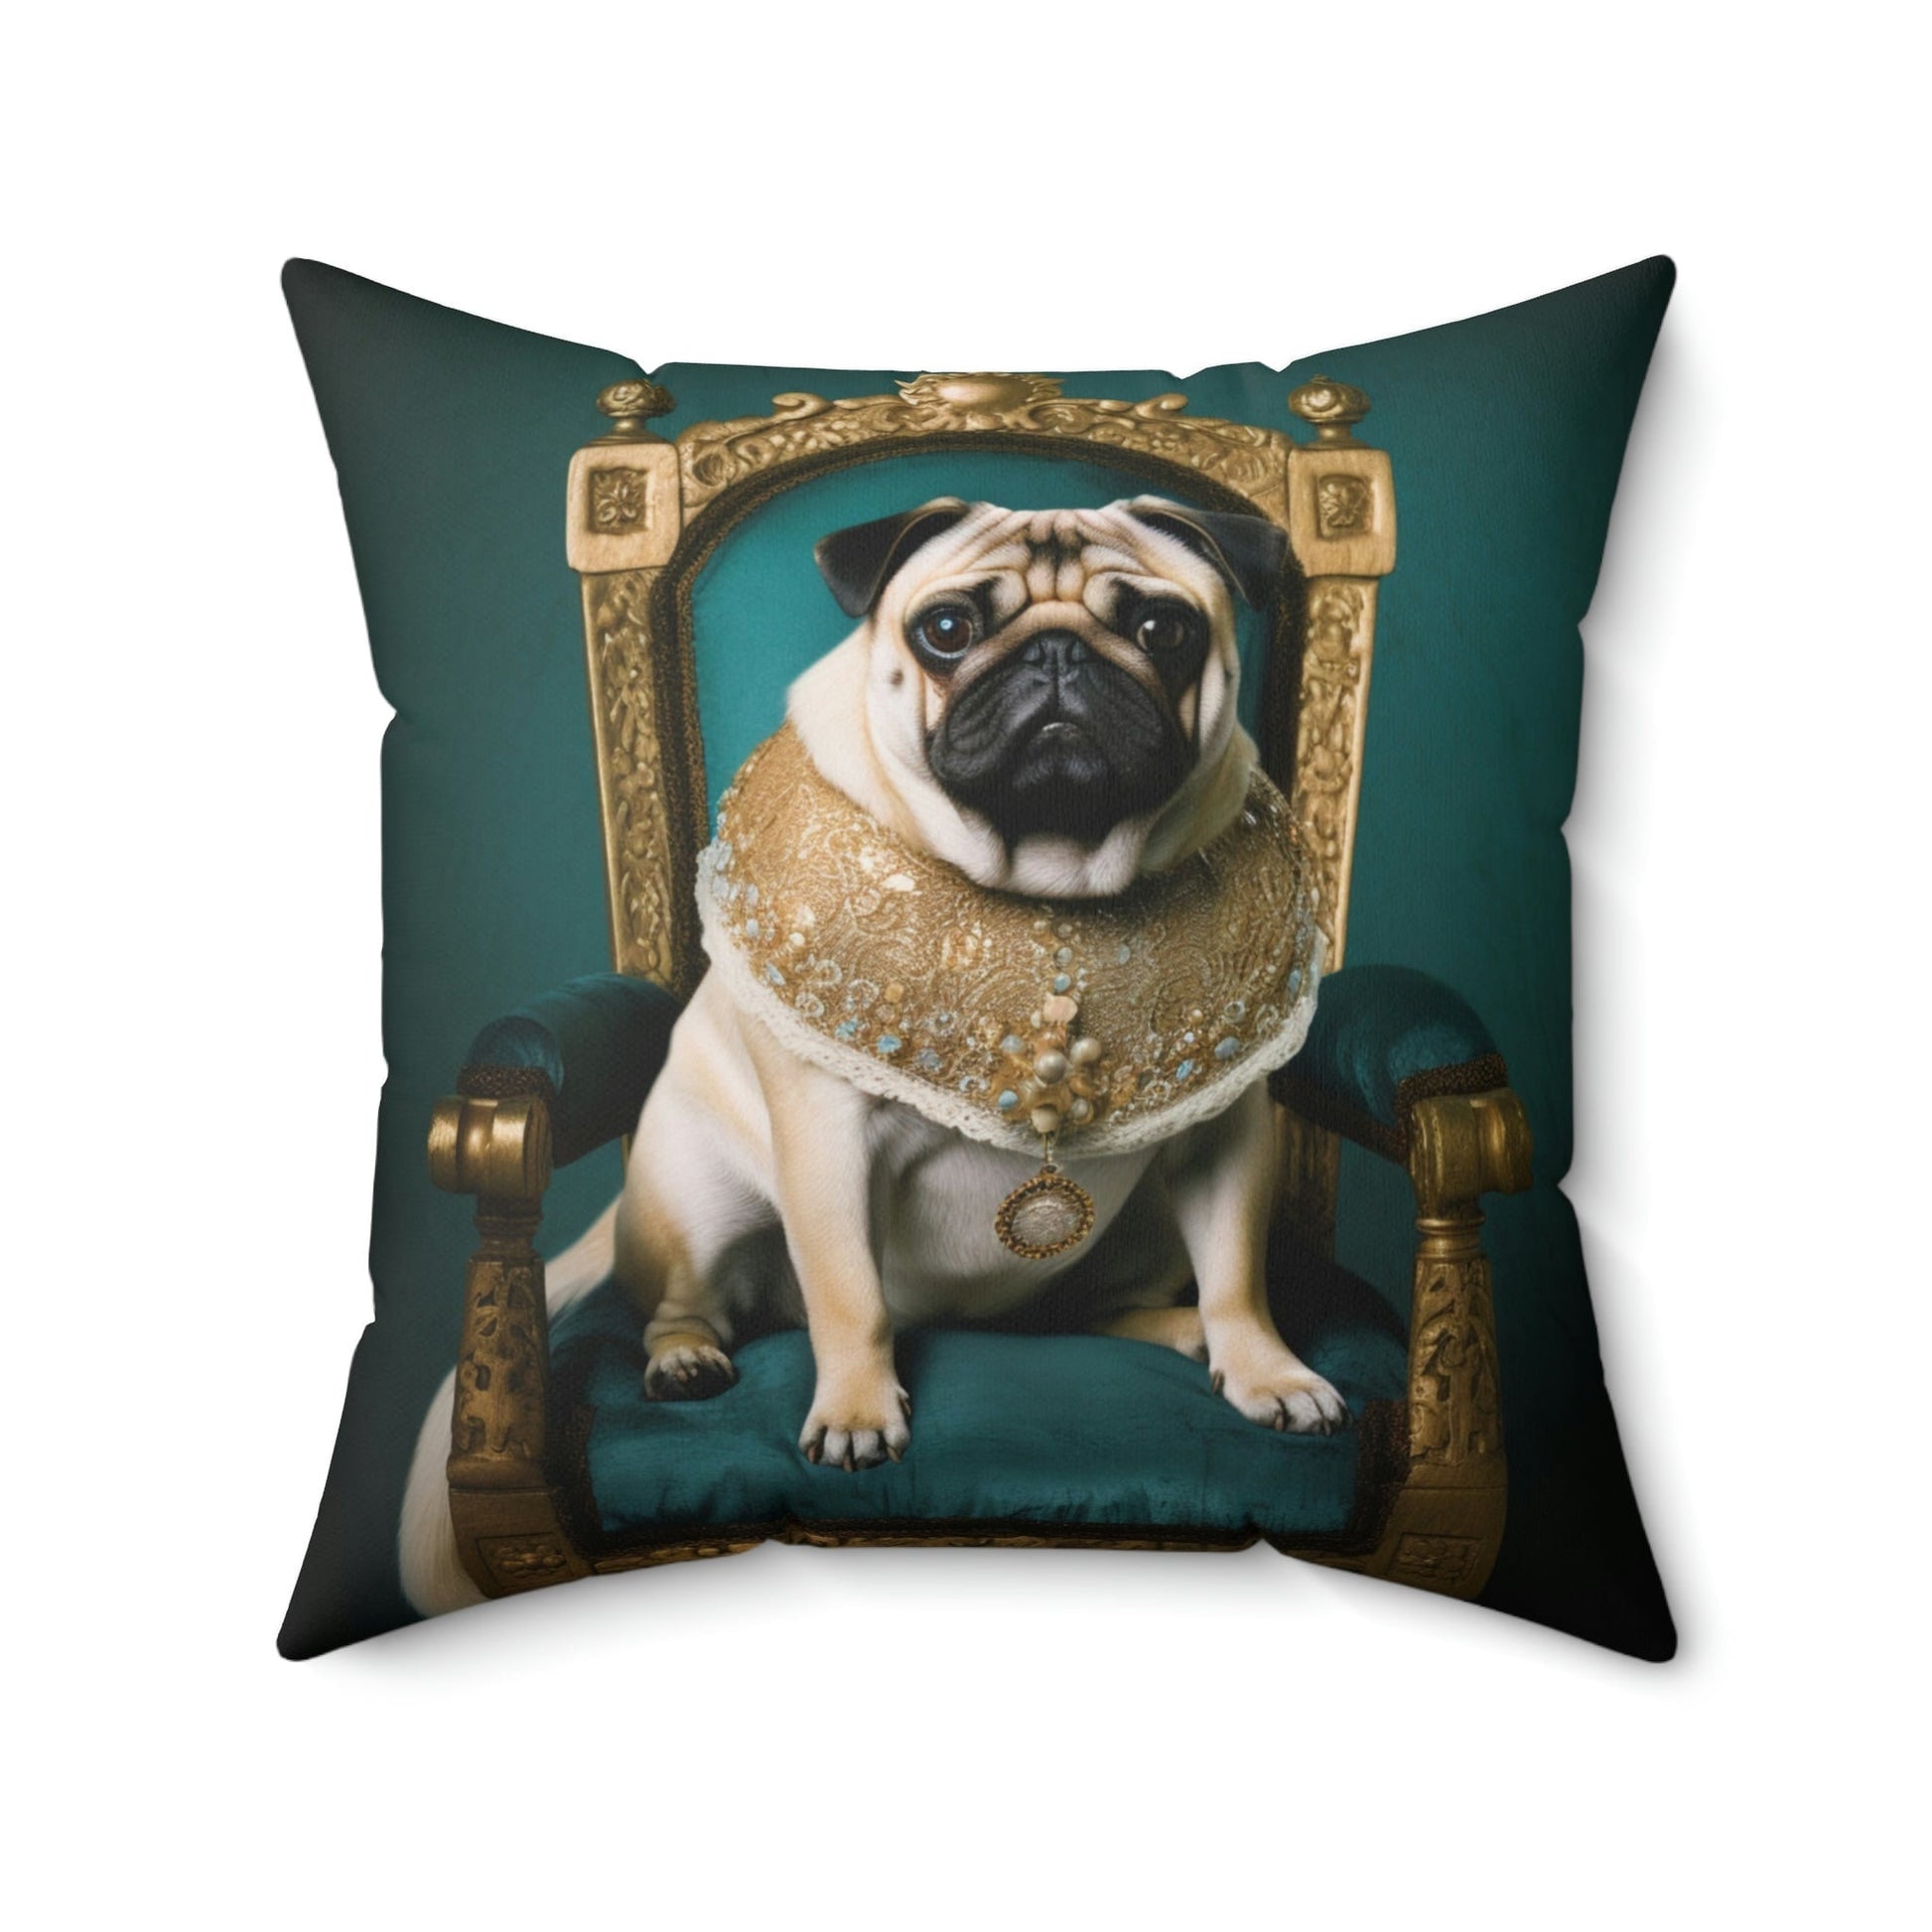 Funny Royal Pug Toss Pillow